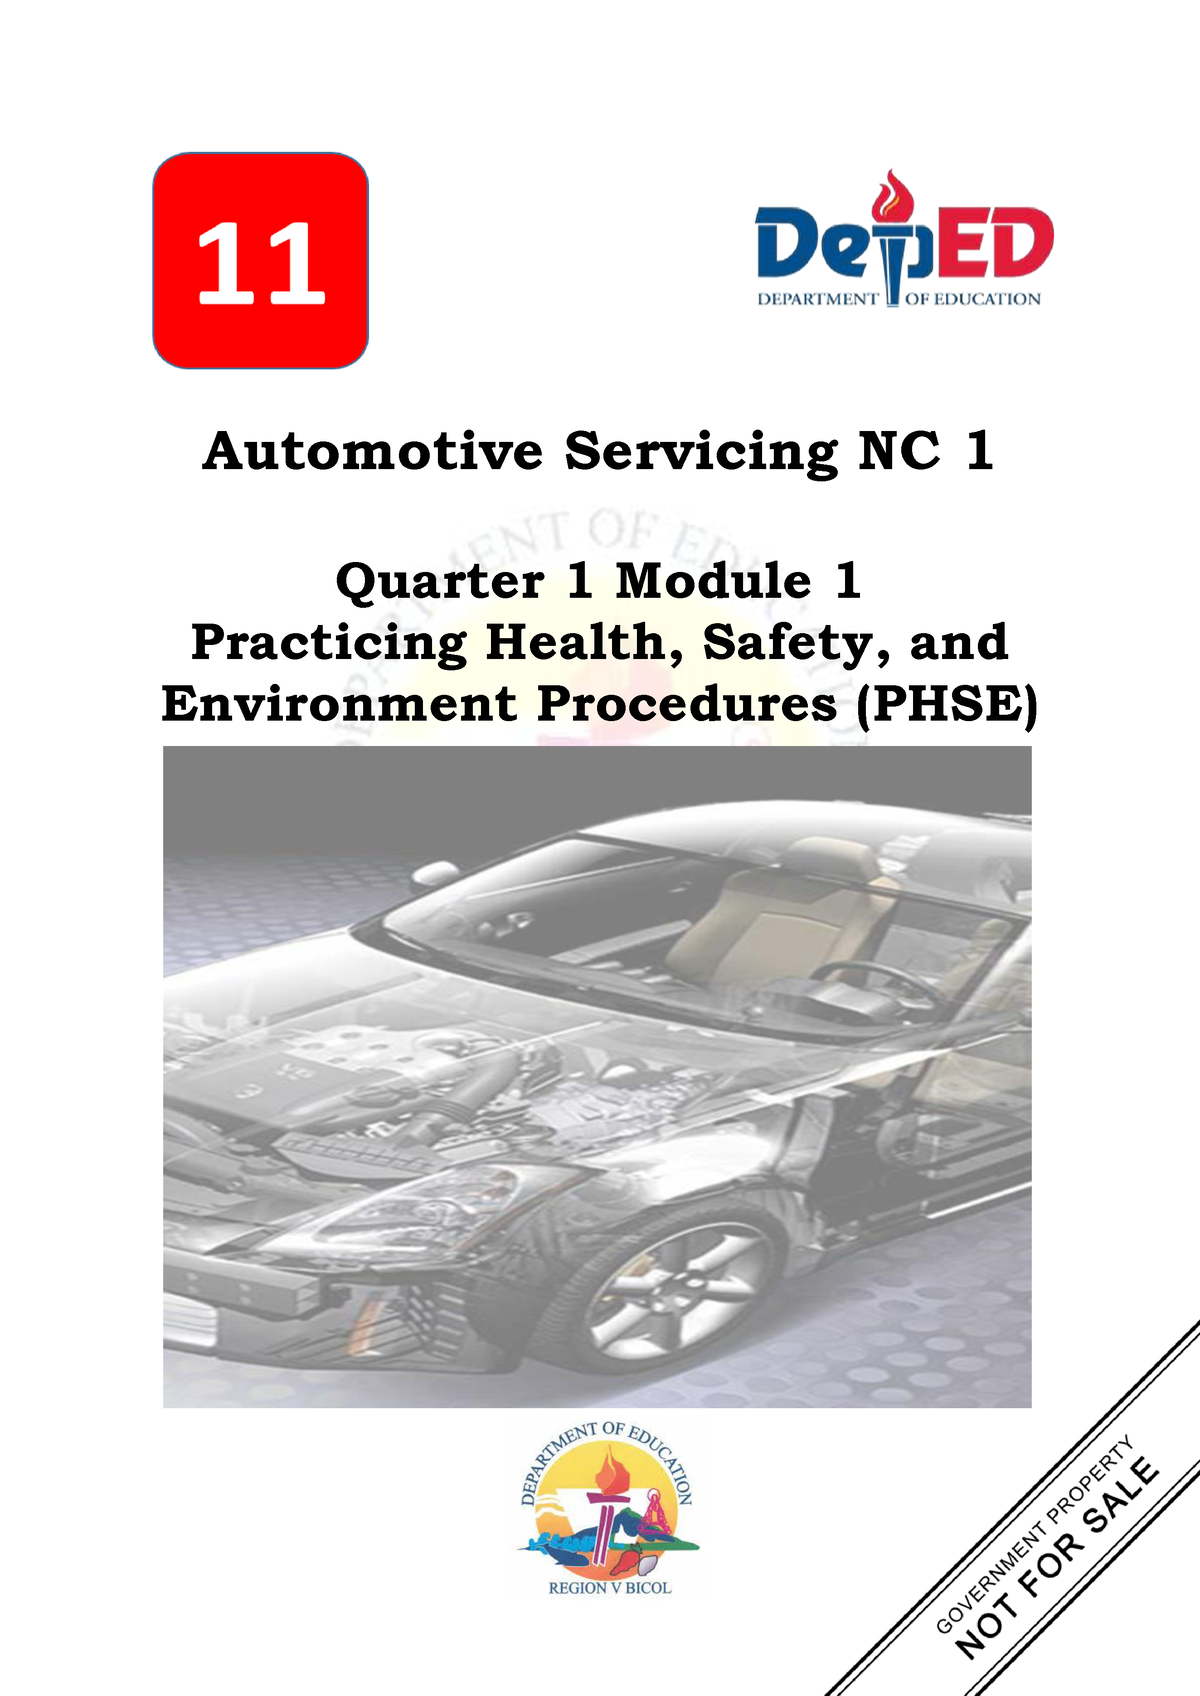 research about automotive servicing